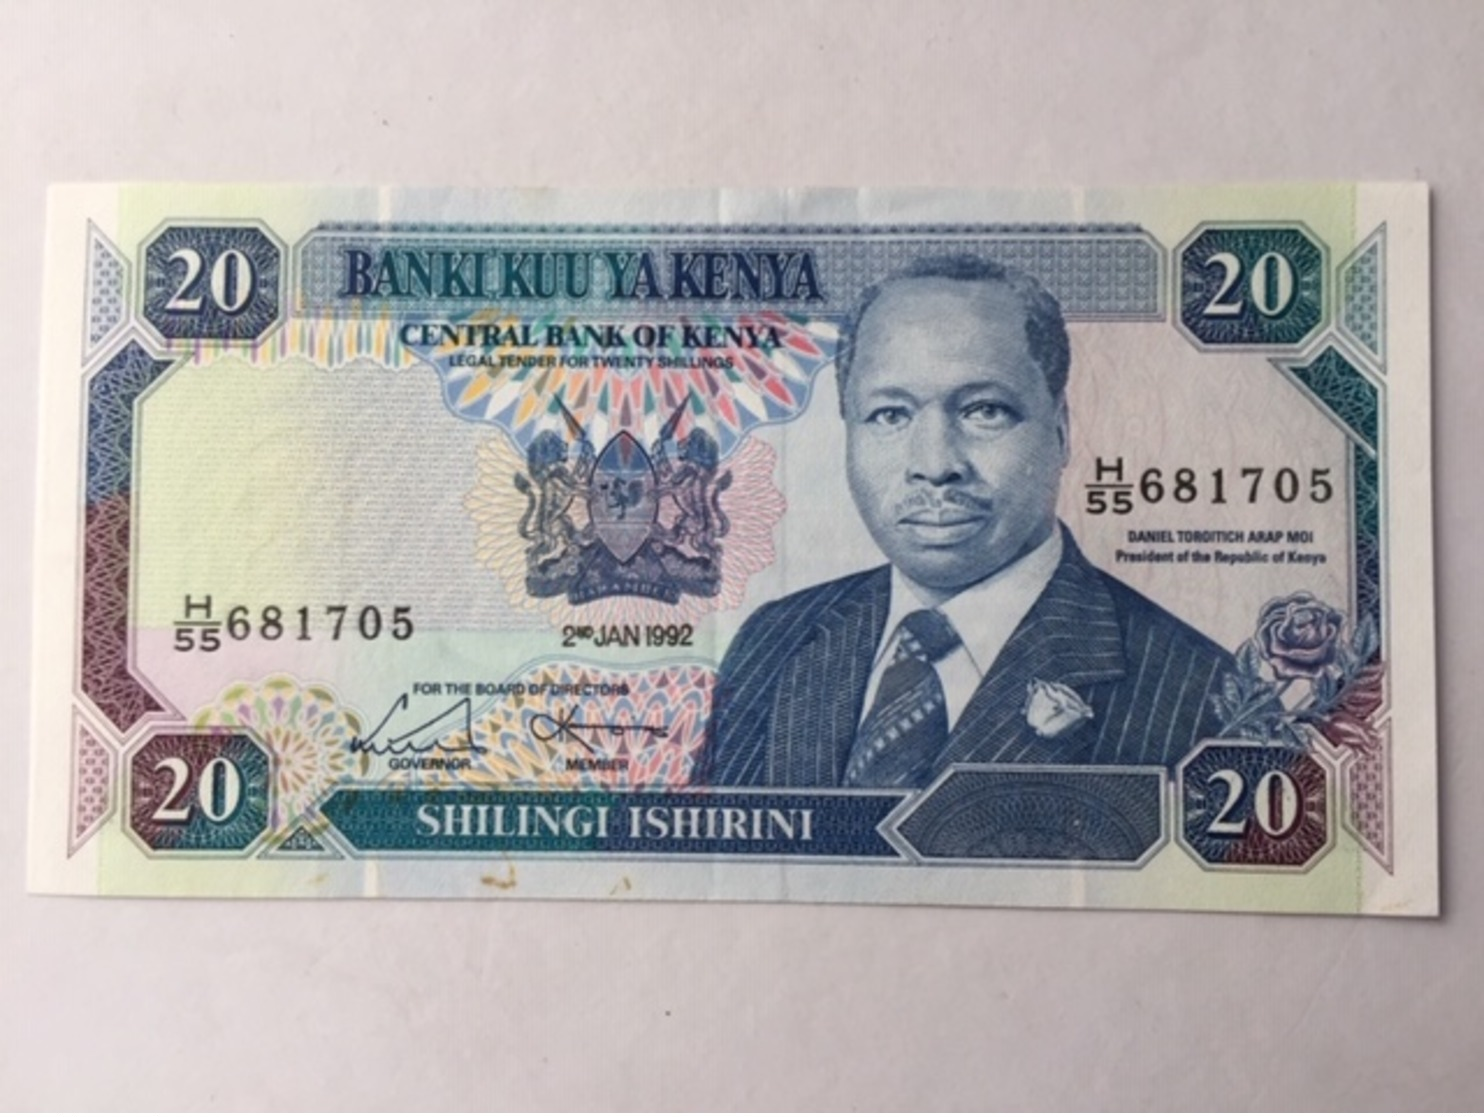 KENYA P25 20 SHILLING 1.7.1992 UNC - Kenya